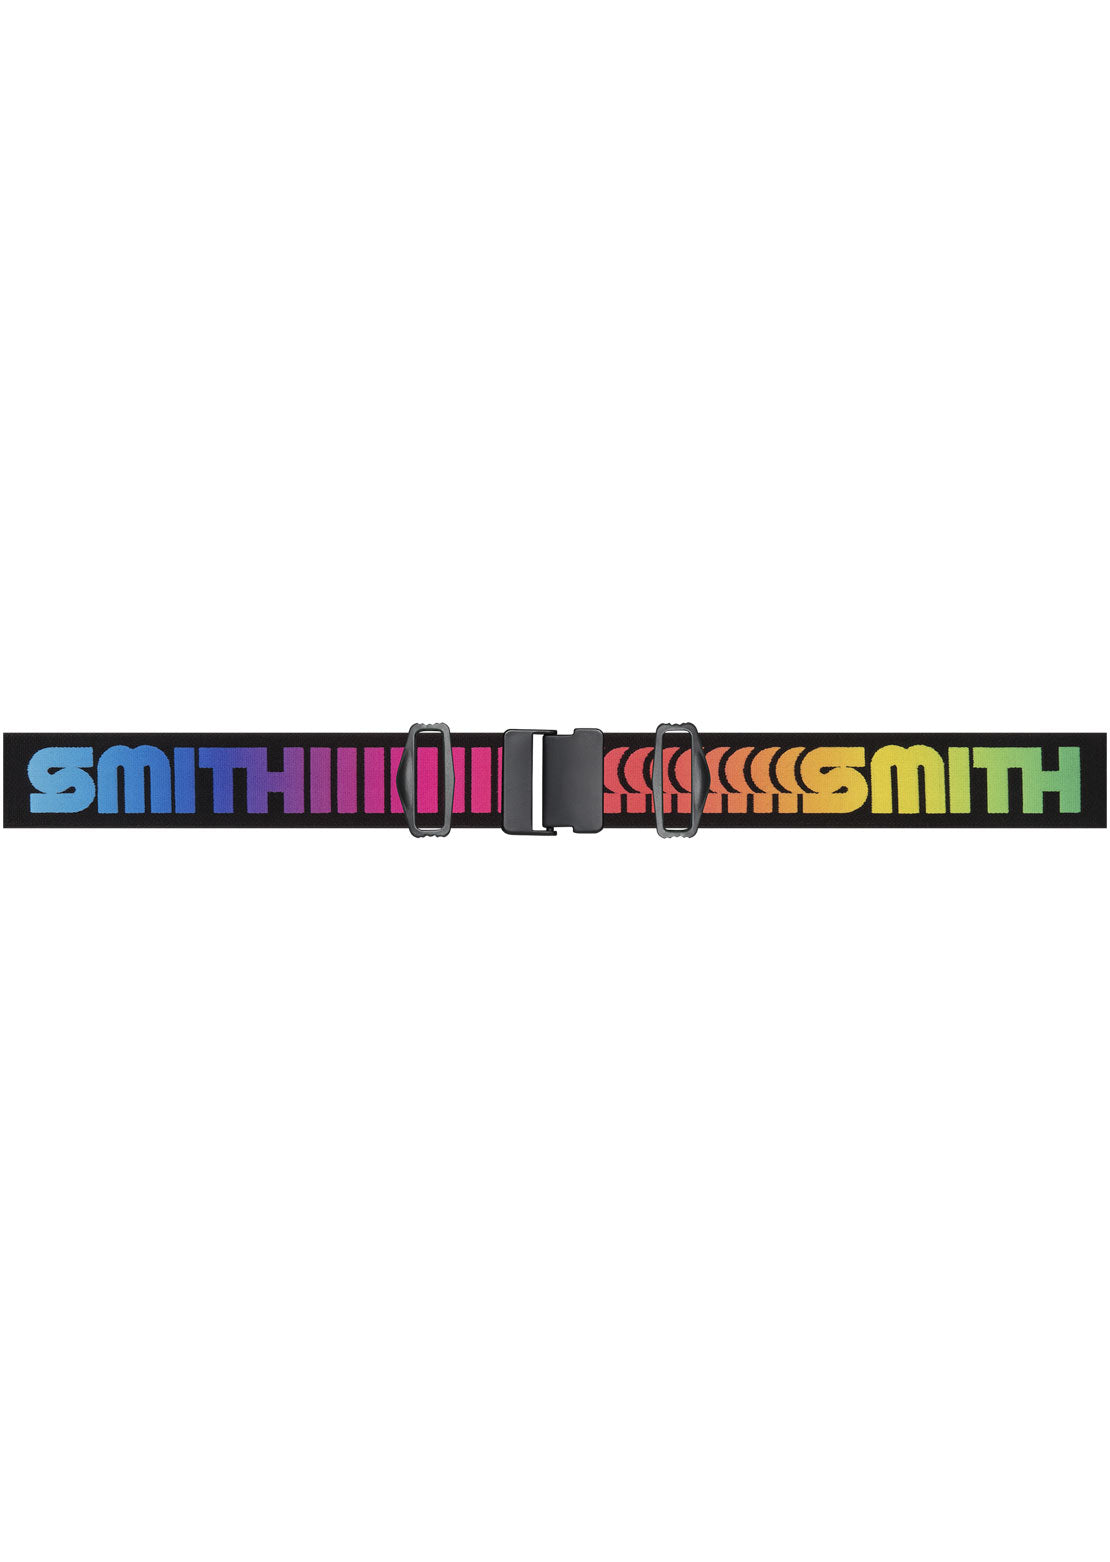 Smith Squad Mag Goggles Artist Series/Draplin Spectrum/ChromaPop Everyday Violet Mirror